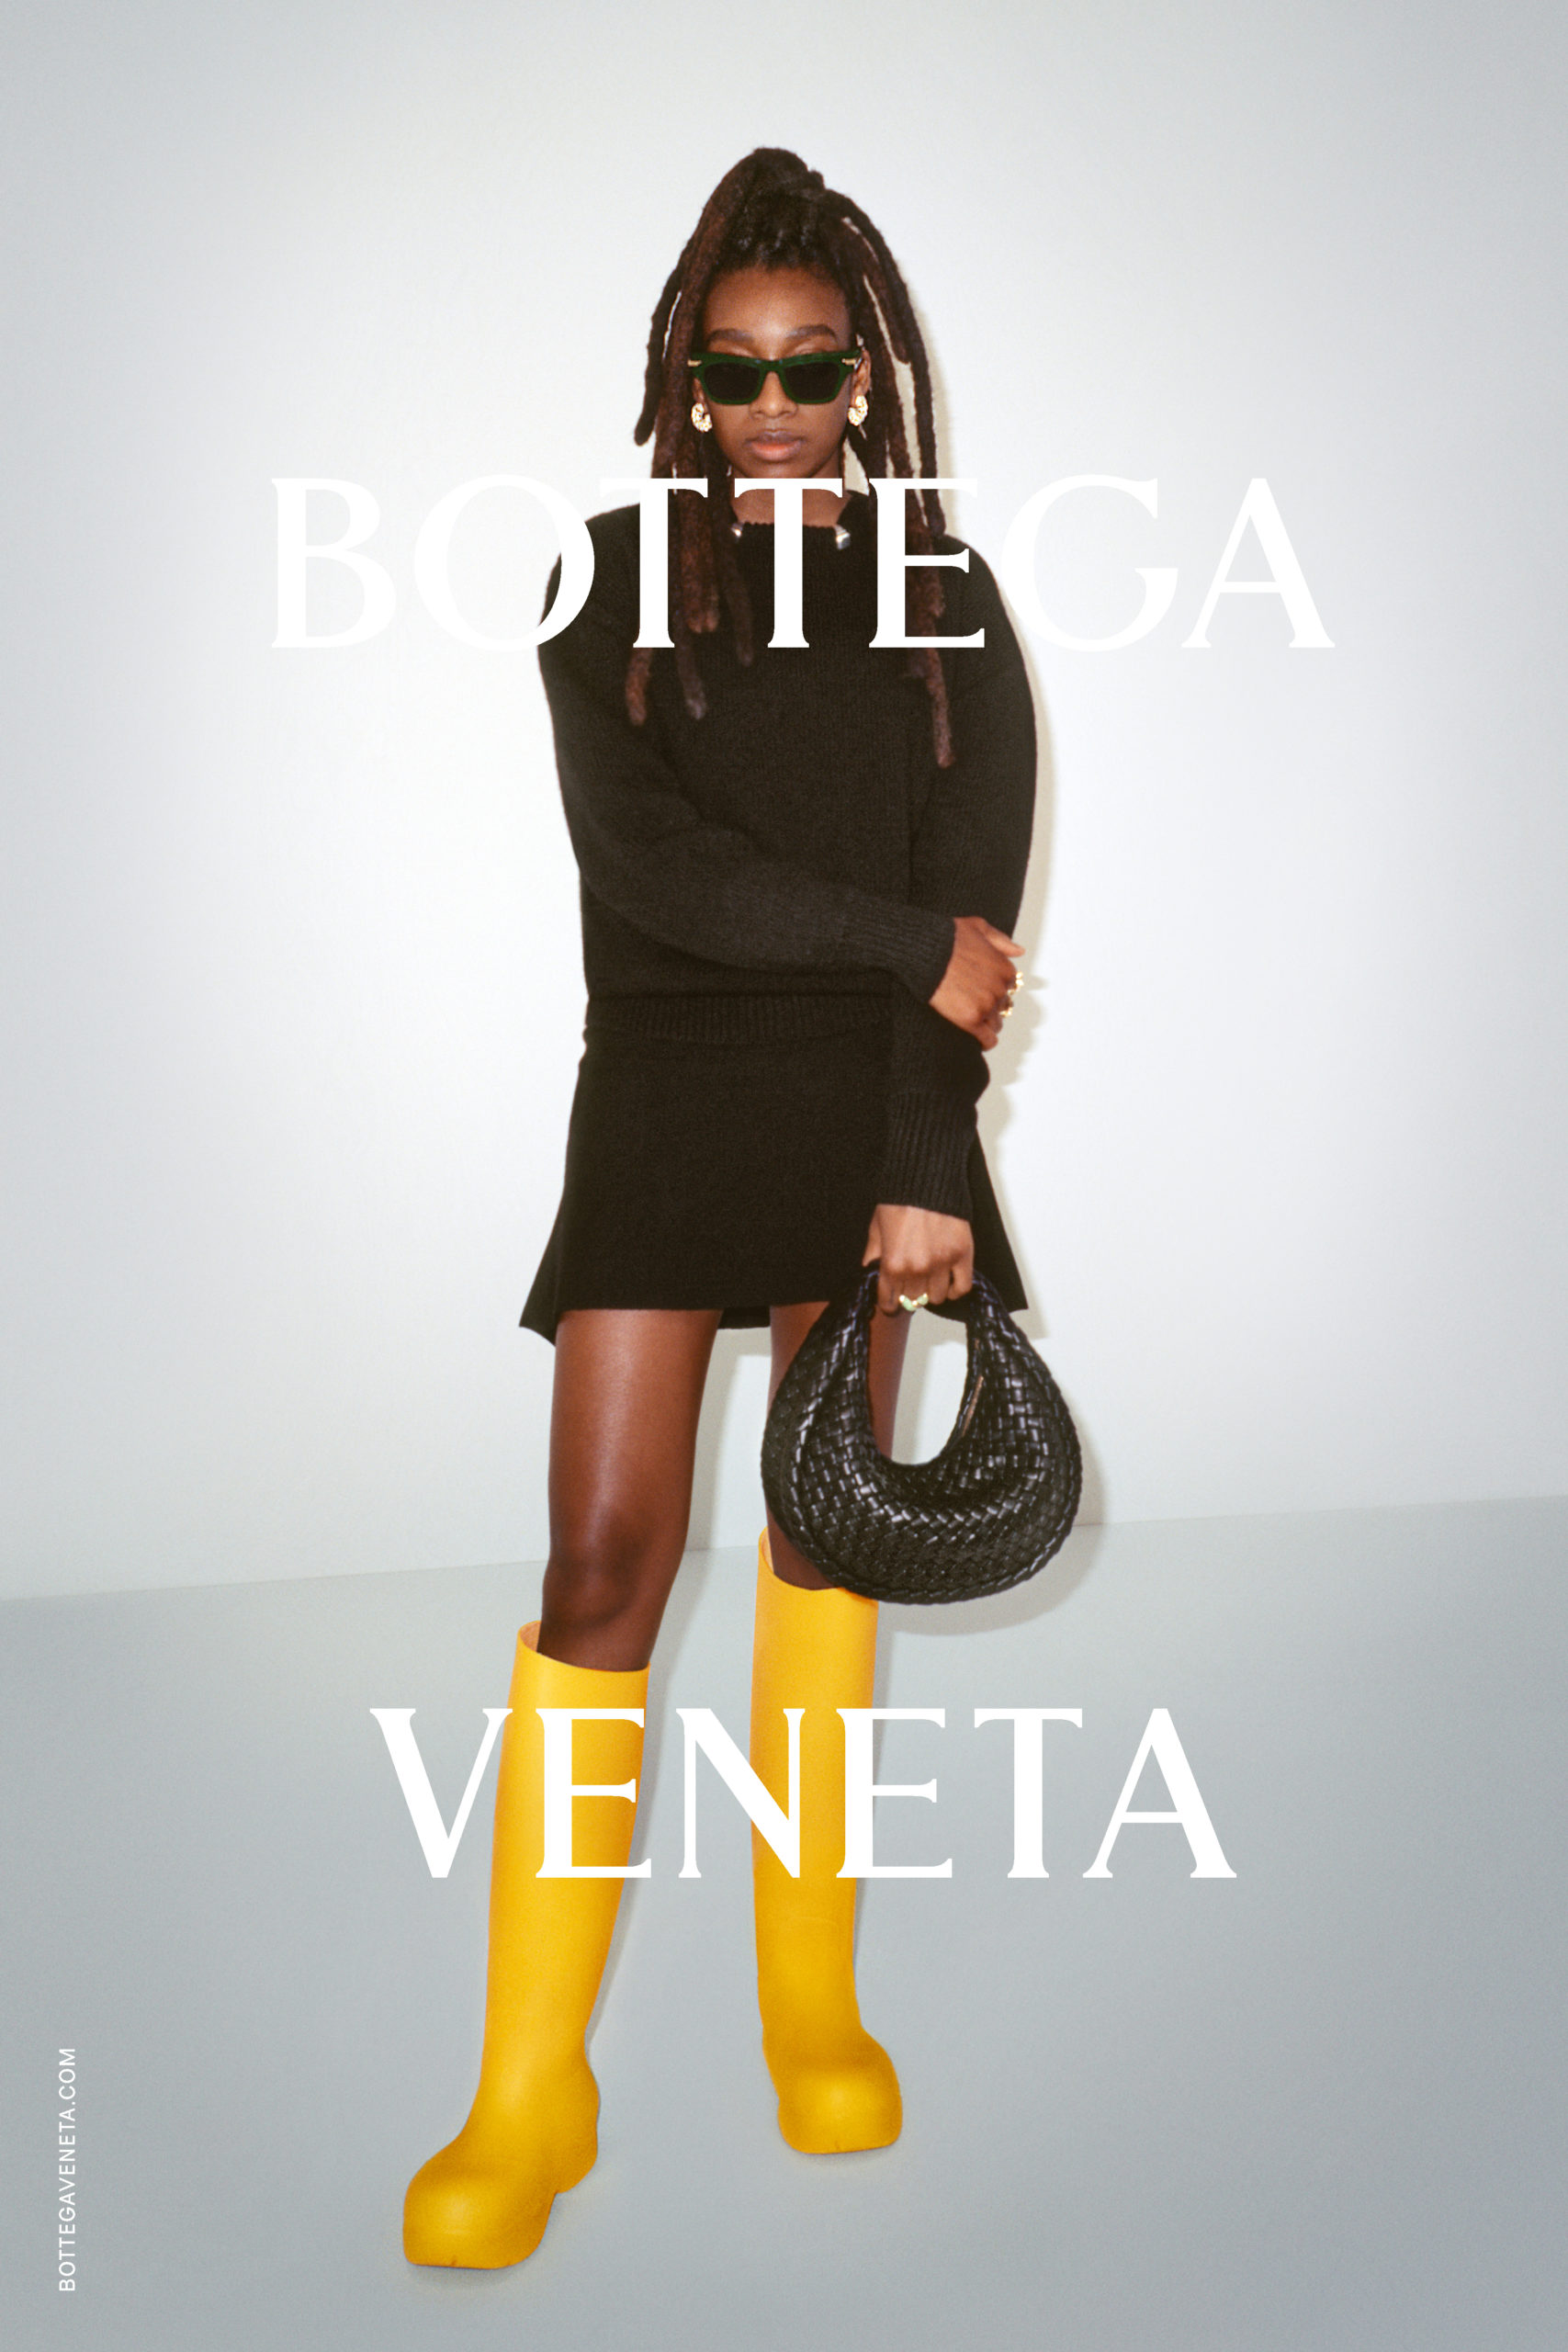 5 Bottega Veneta pieces that celebrities are wearing